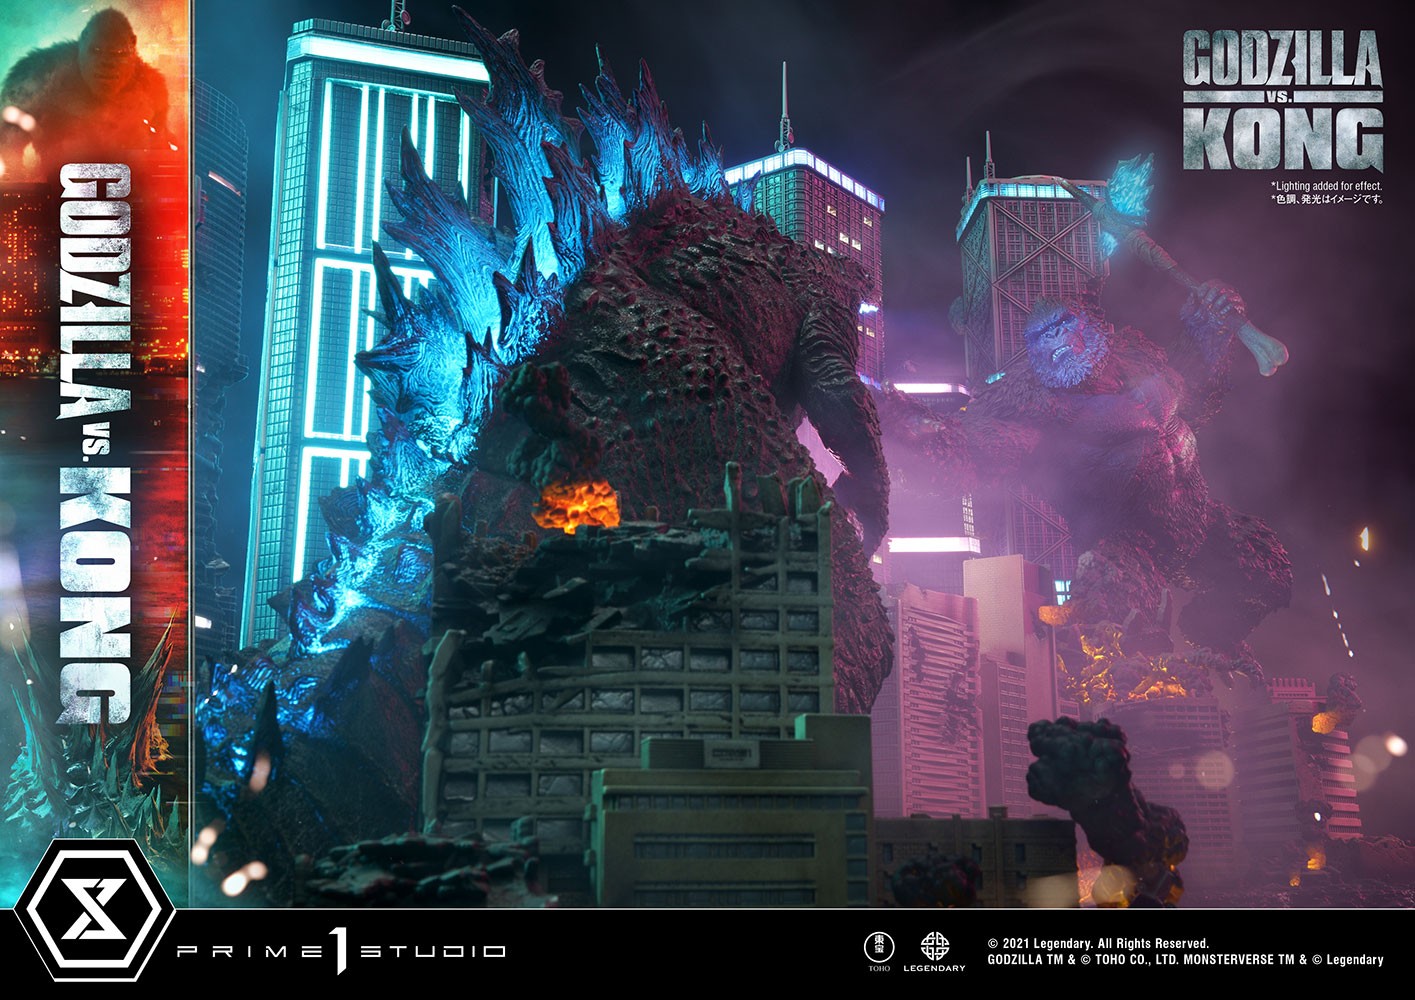 Godzilla vs Kong Final Battle (Prototype Shown) View 34